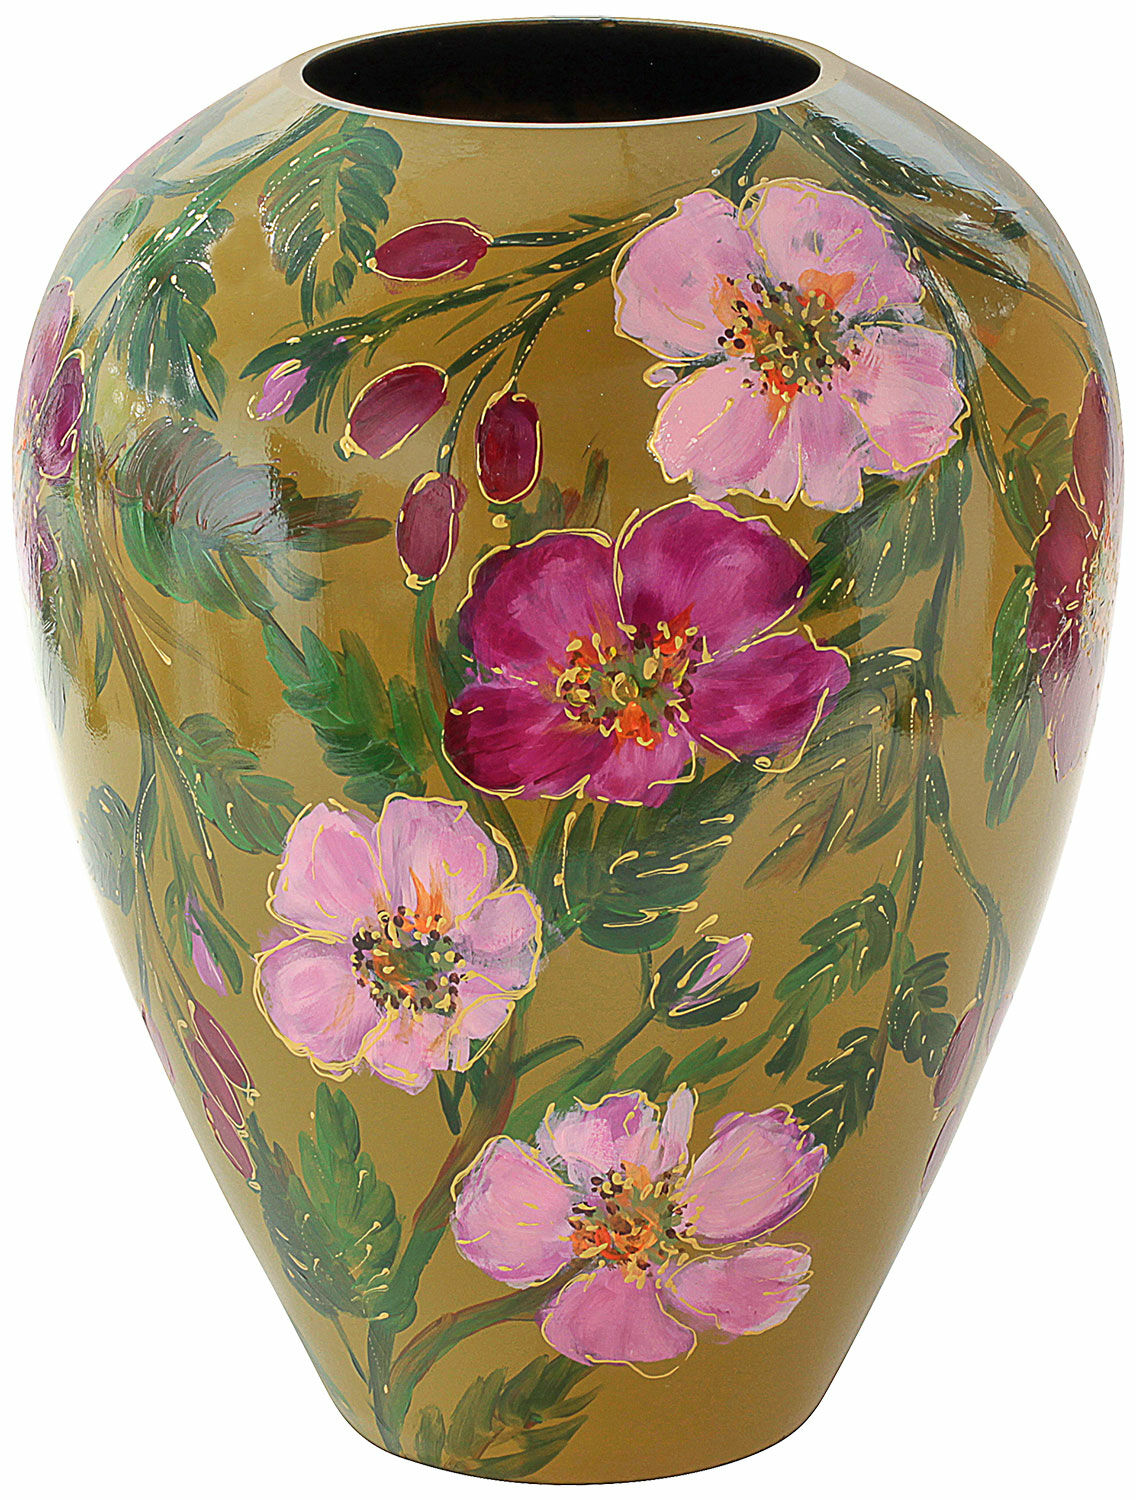 Glass vase "Hollyhocks" by Milou van Schaik Martinet